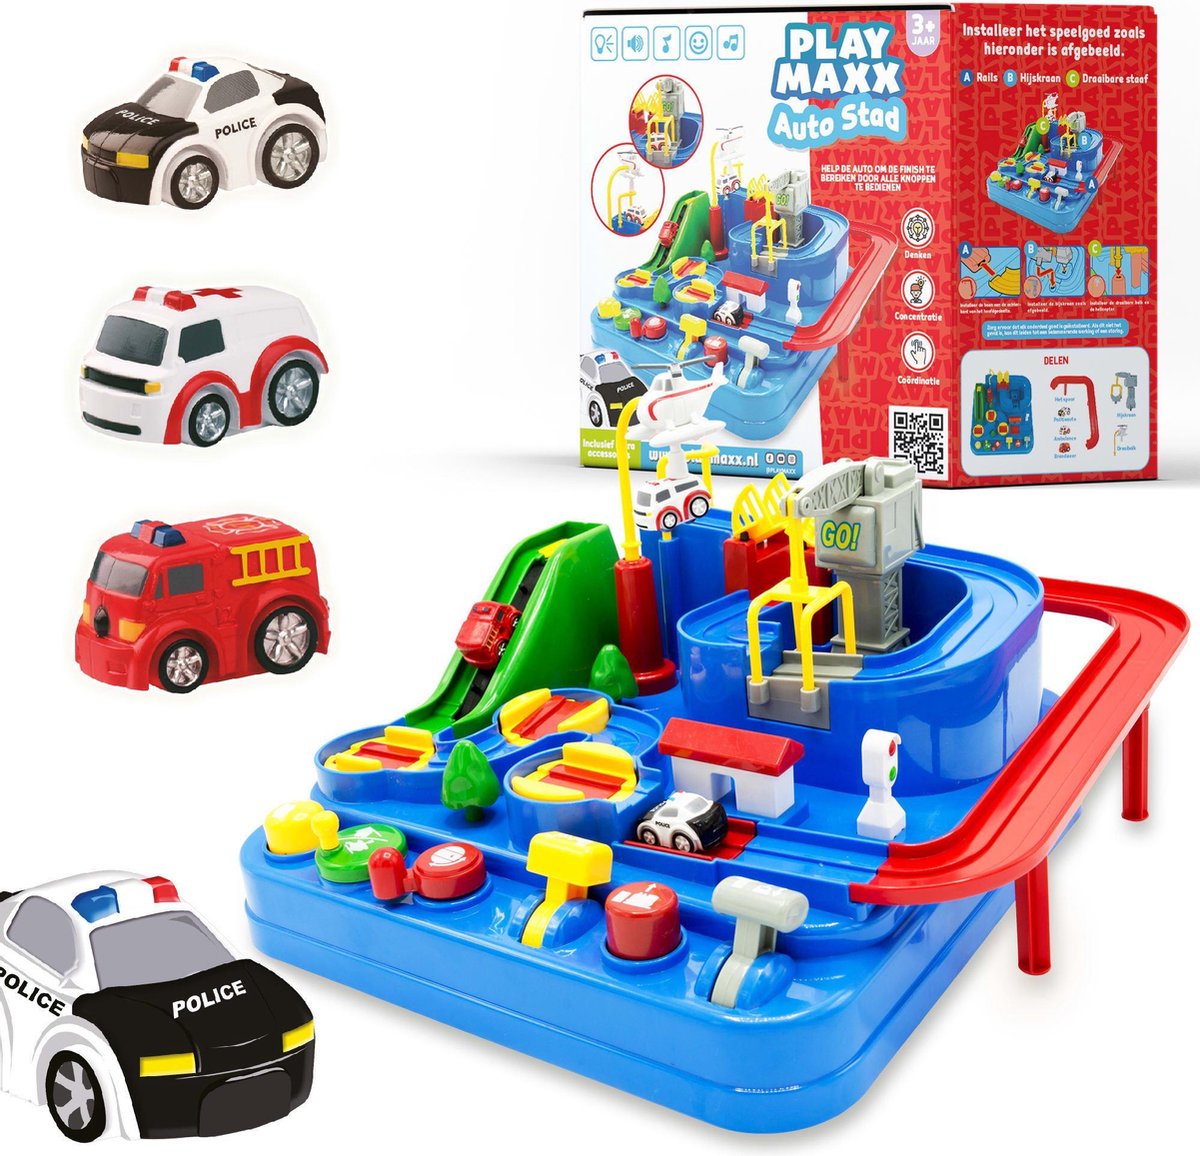 PlayMaxx AutoStad - Auto Speelgoed met Accessoires - Helikopter - Politie -  Ambulance... | bol.com